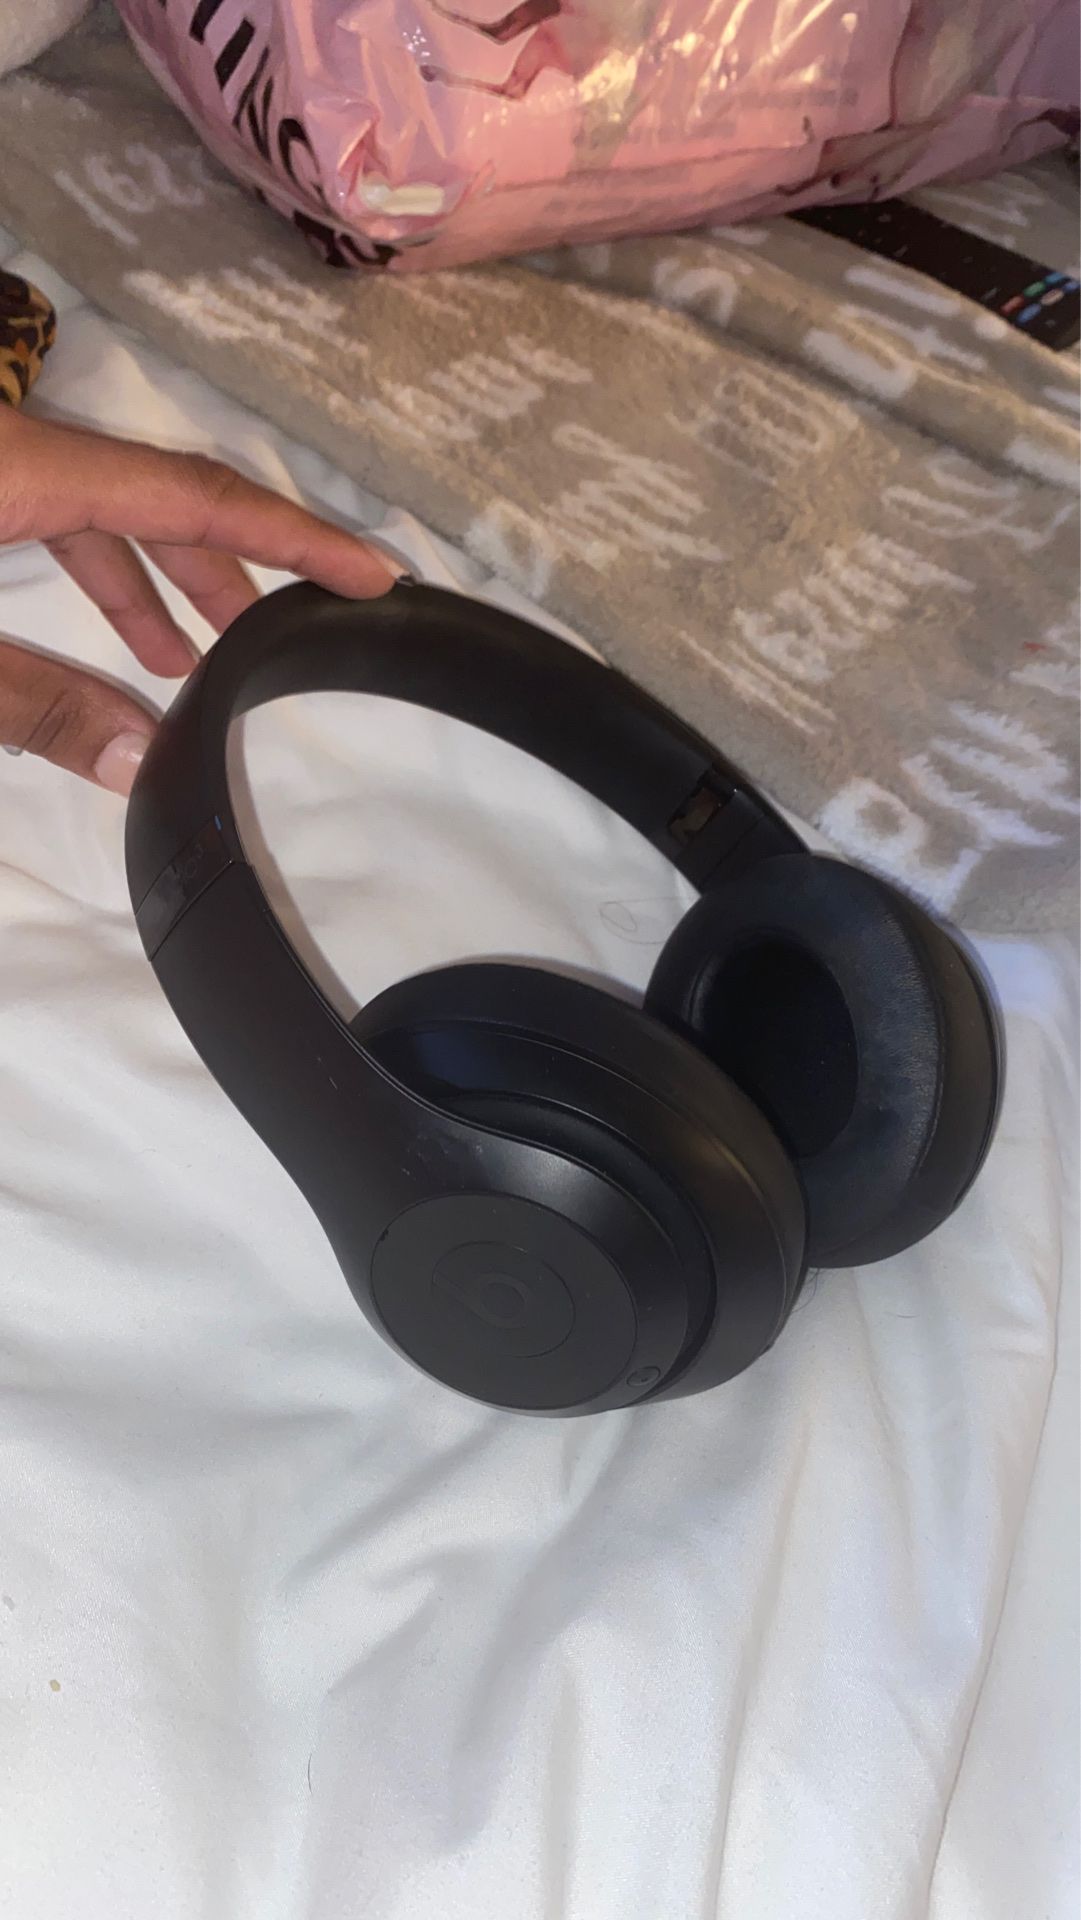 Black beats by Dre headphones